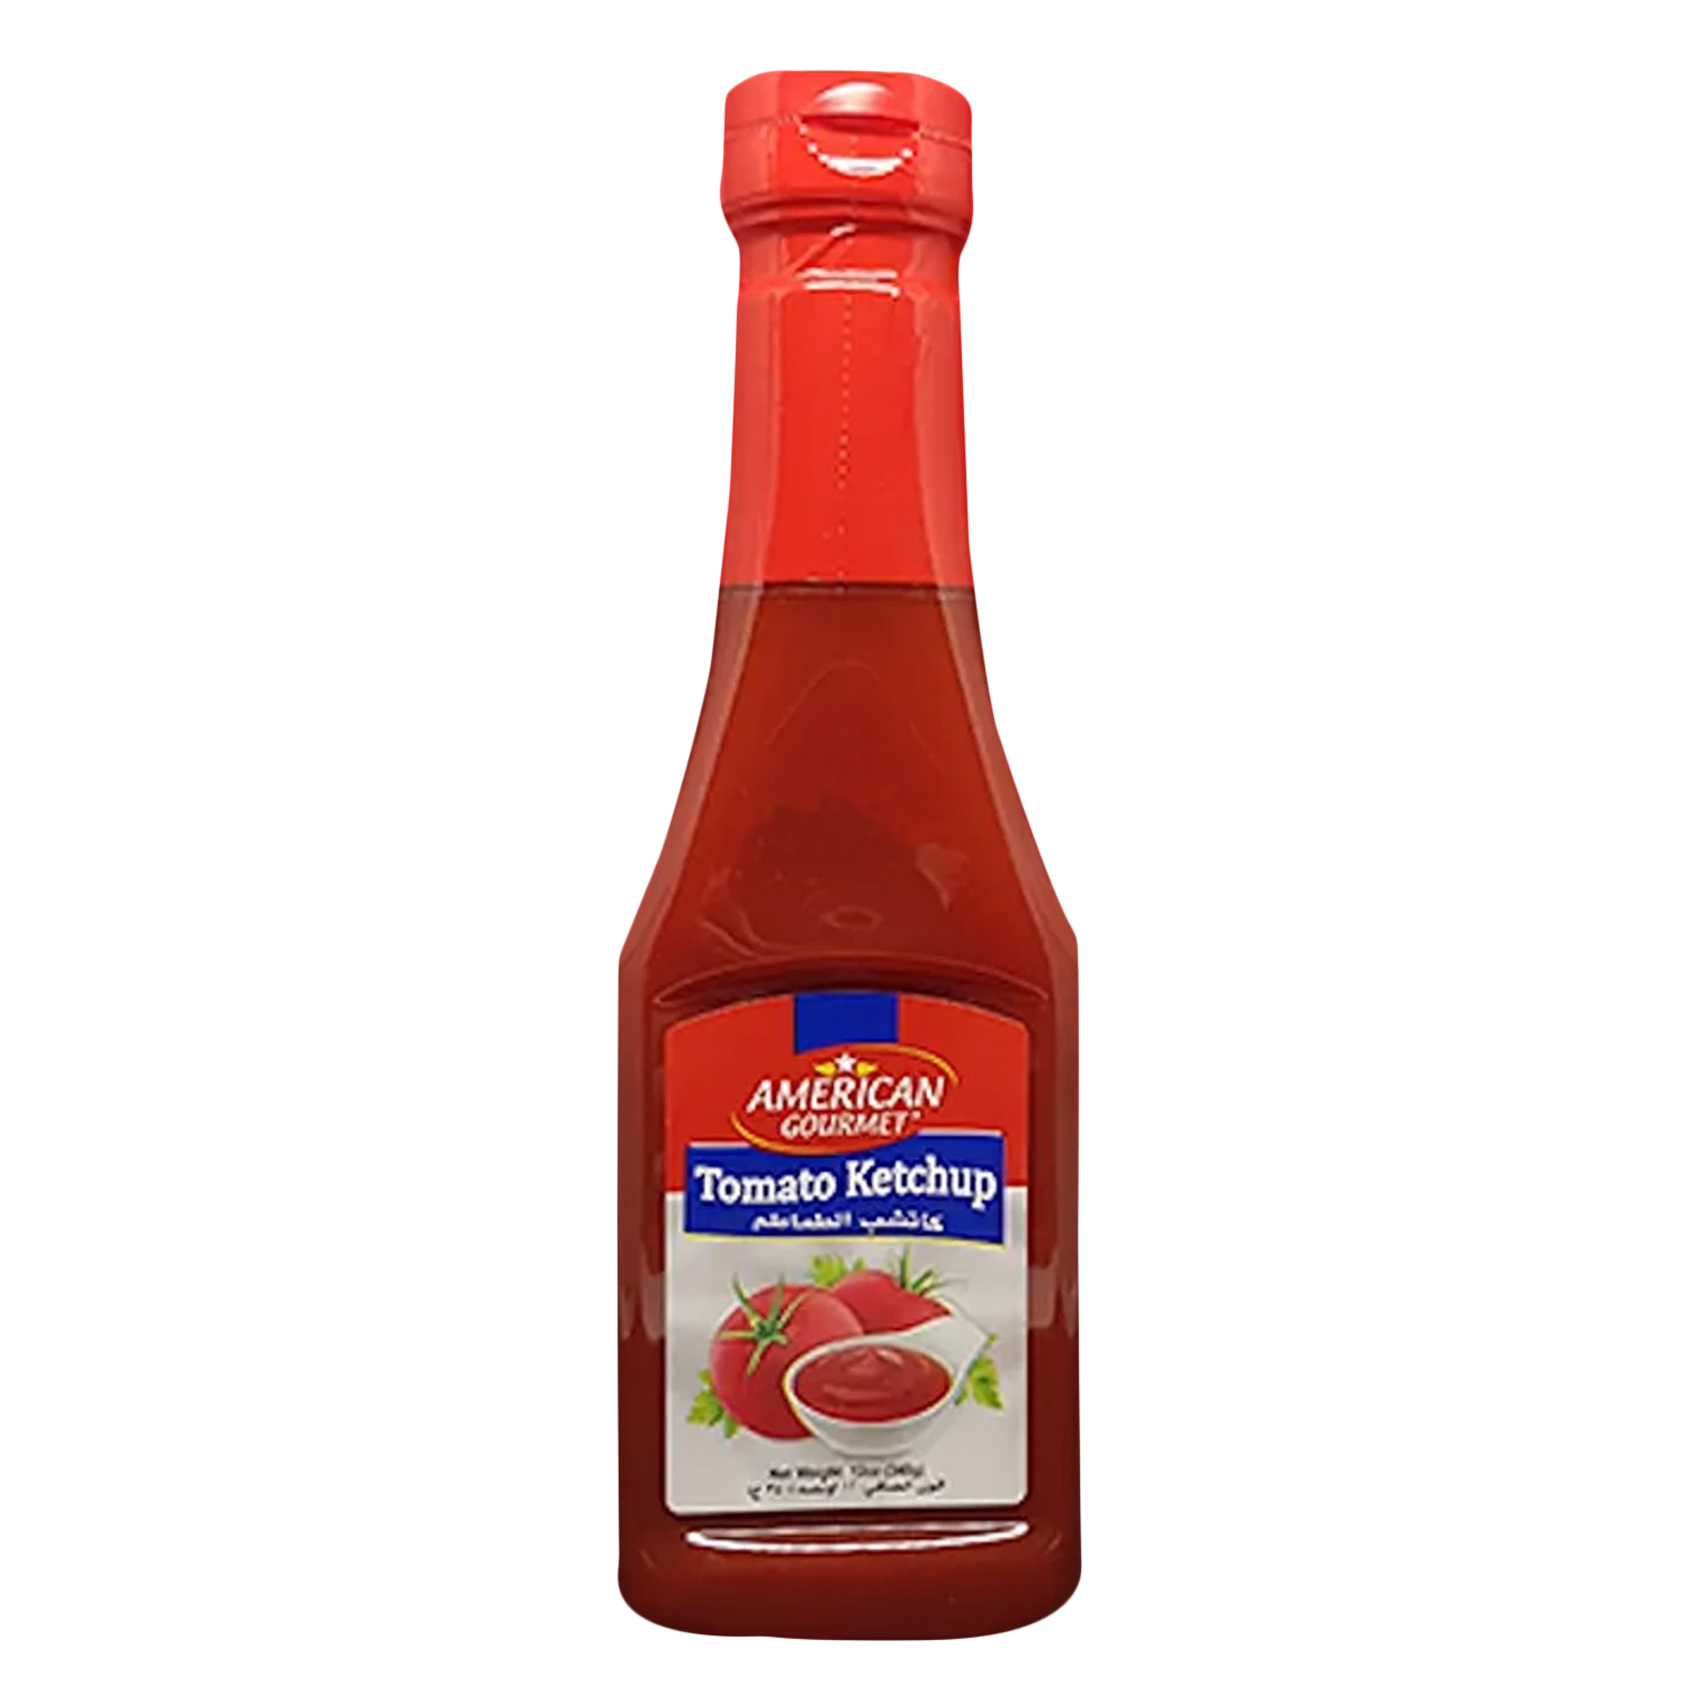 American Gourmet Tomato Ketchup 340g